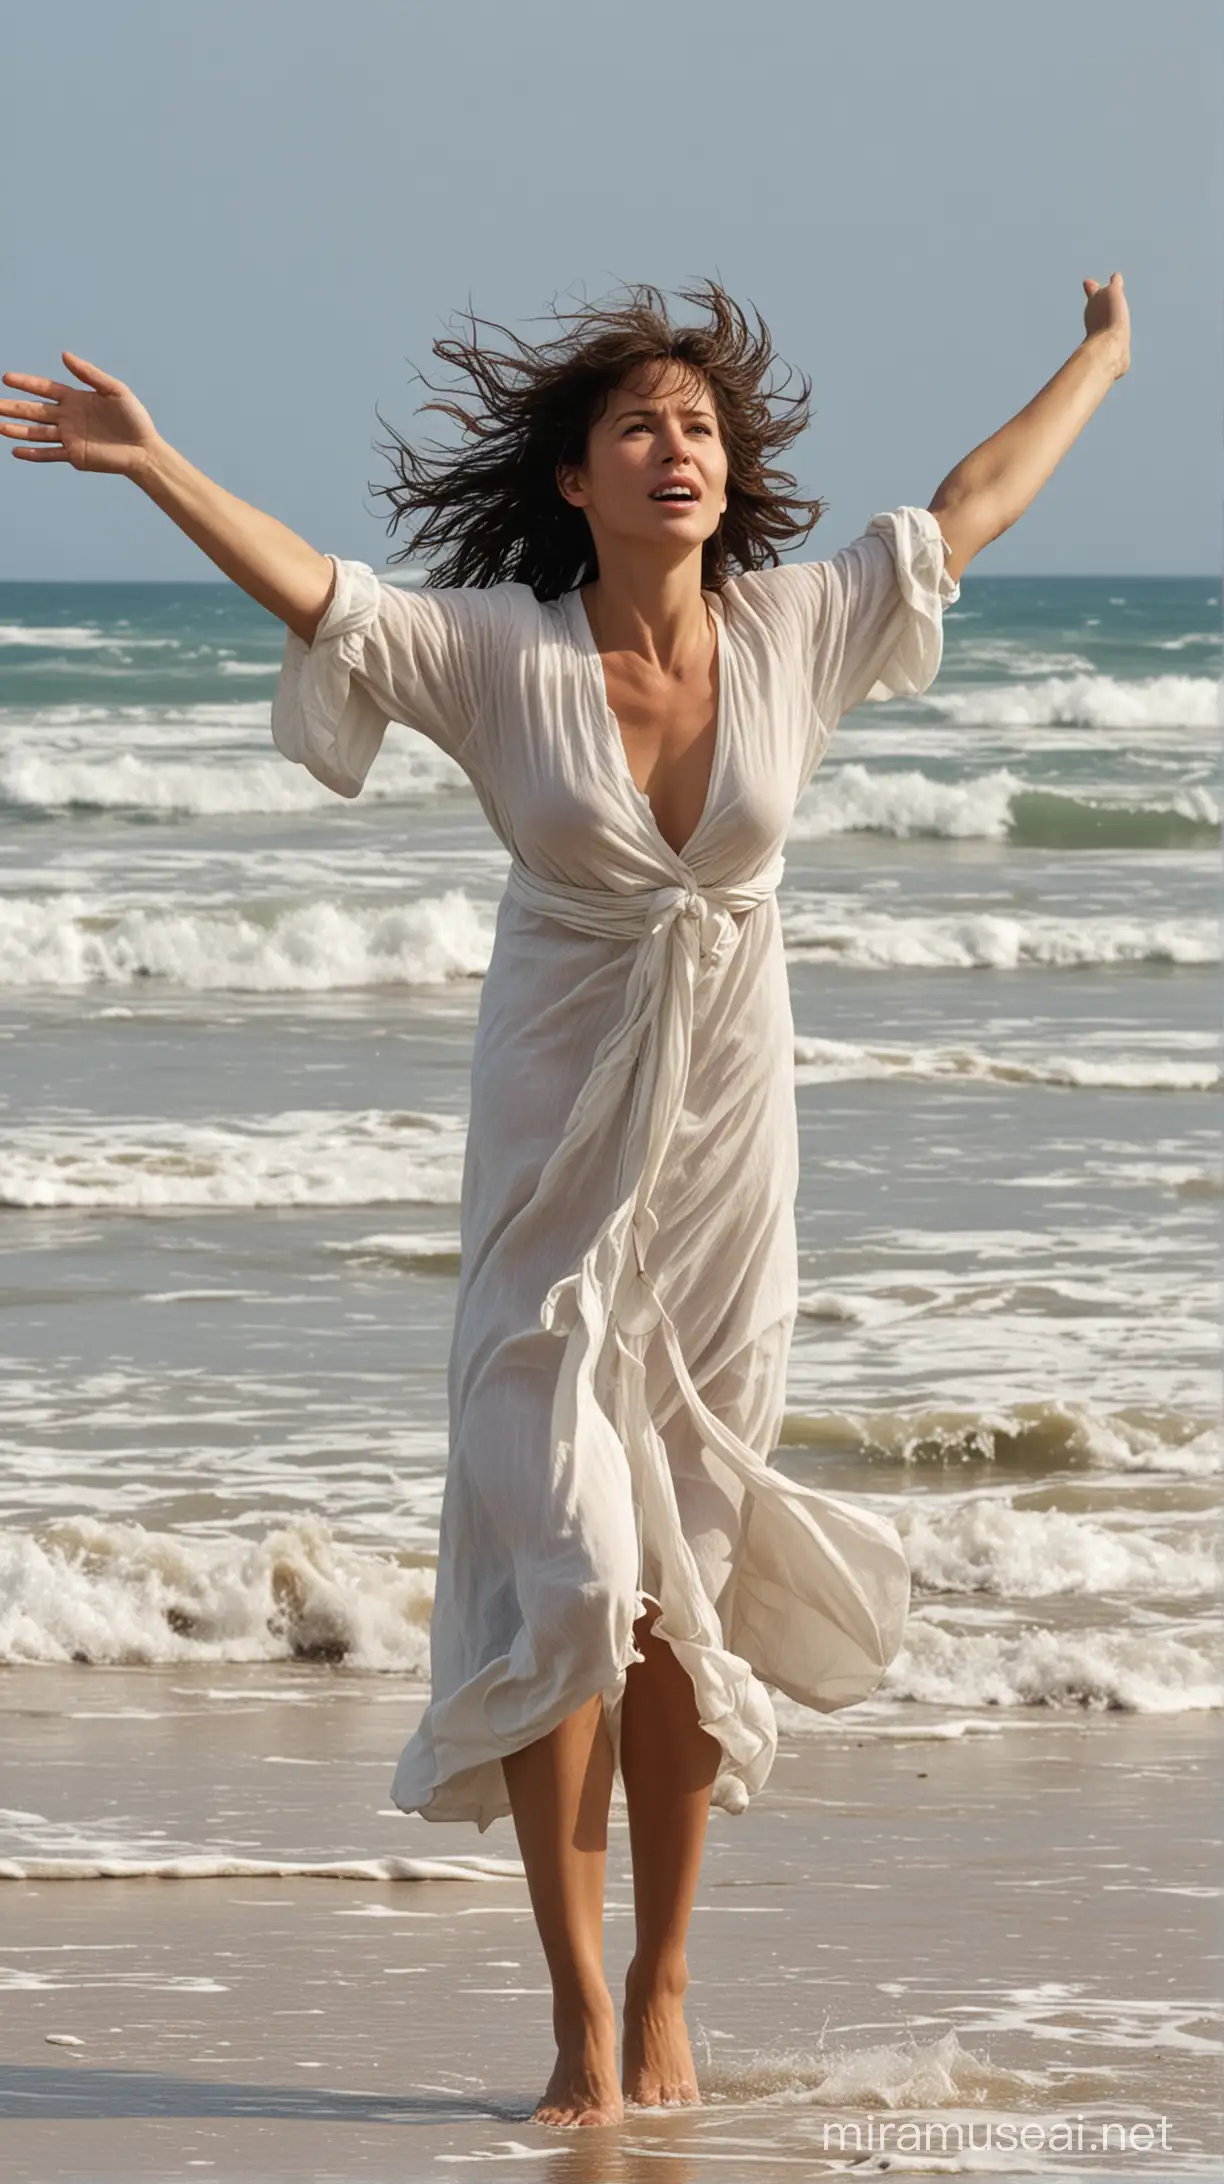 Sophie Marceau Stands Defiant on Windswept Beach with Ocean Horizon